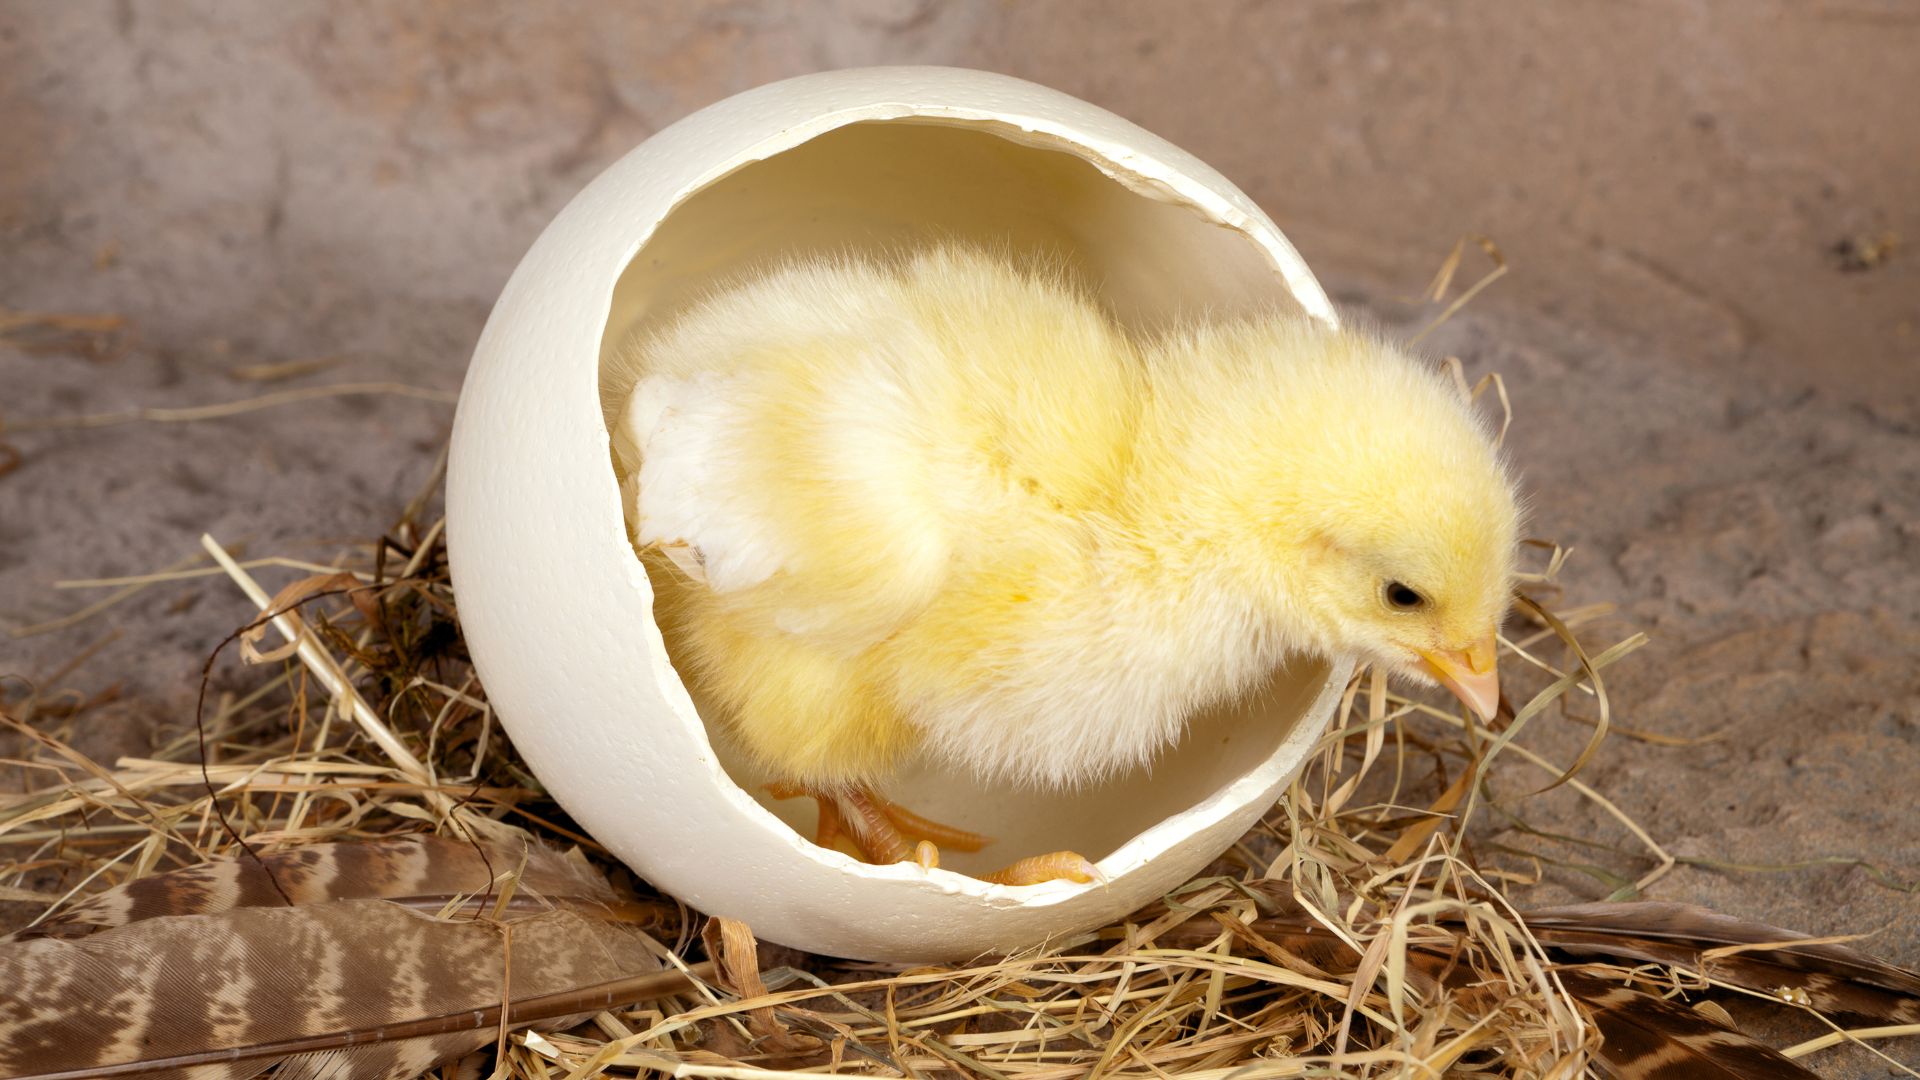 A fertilised egg